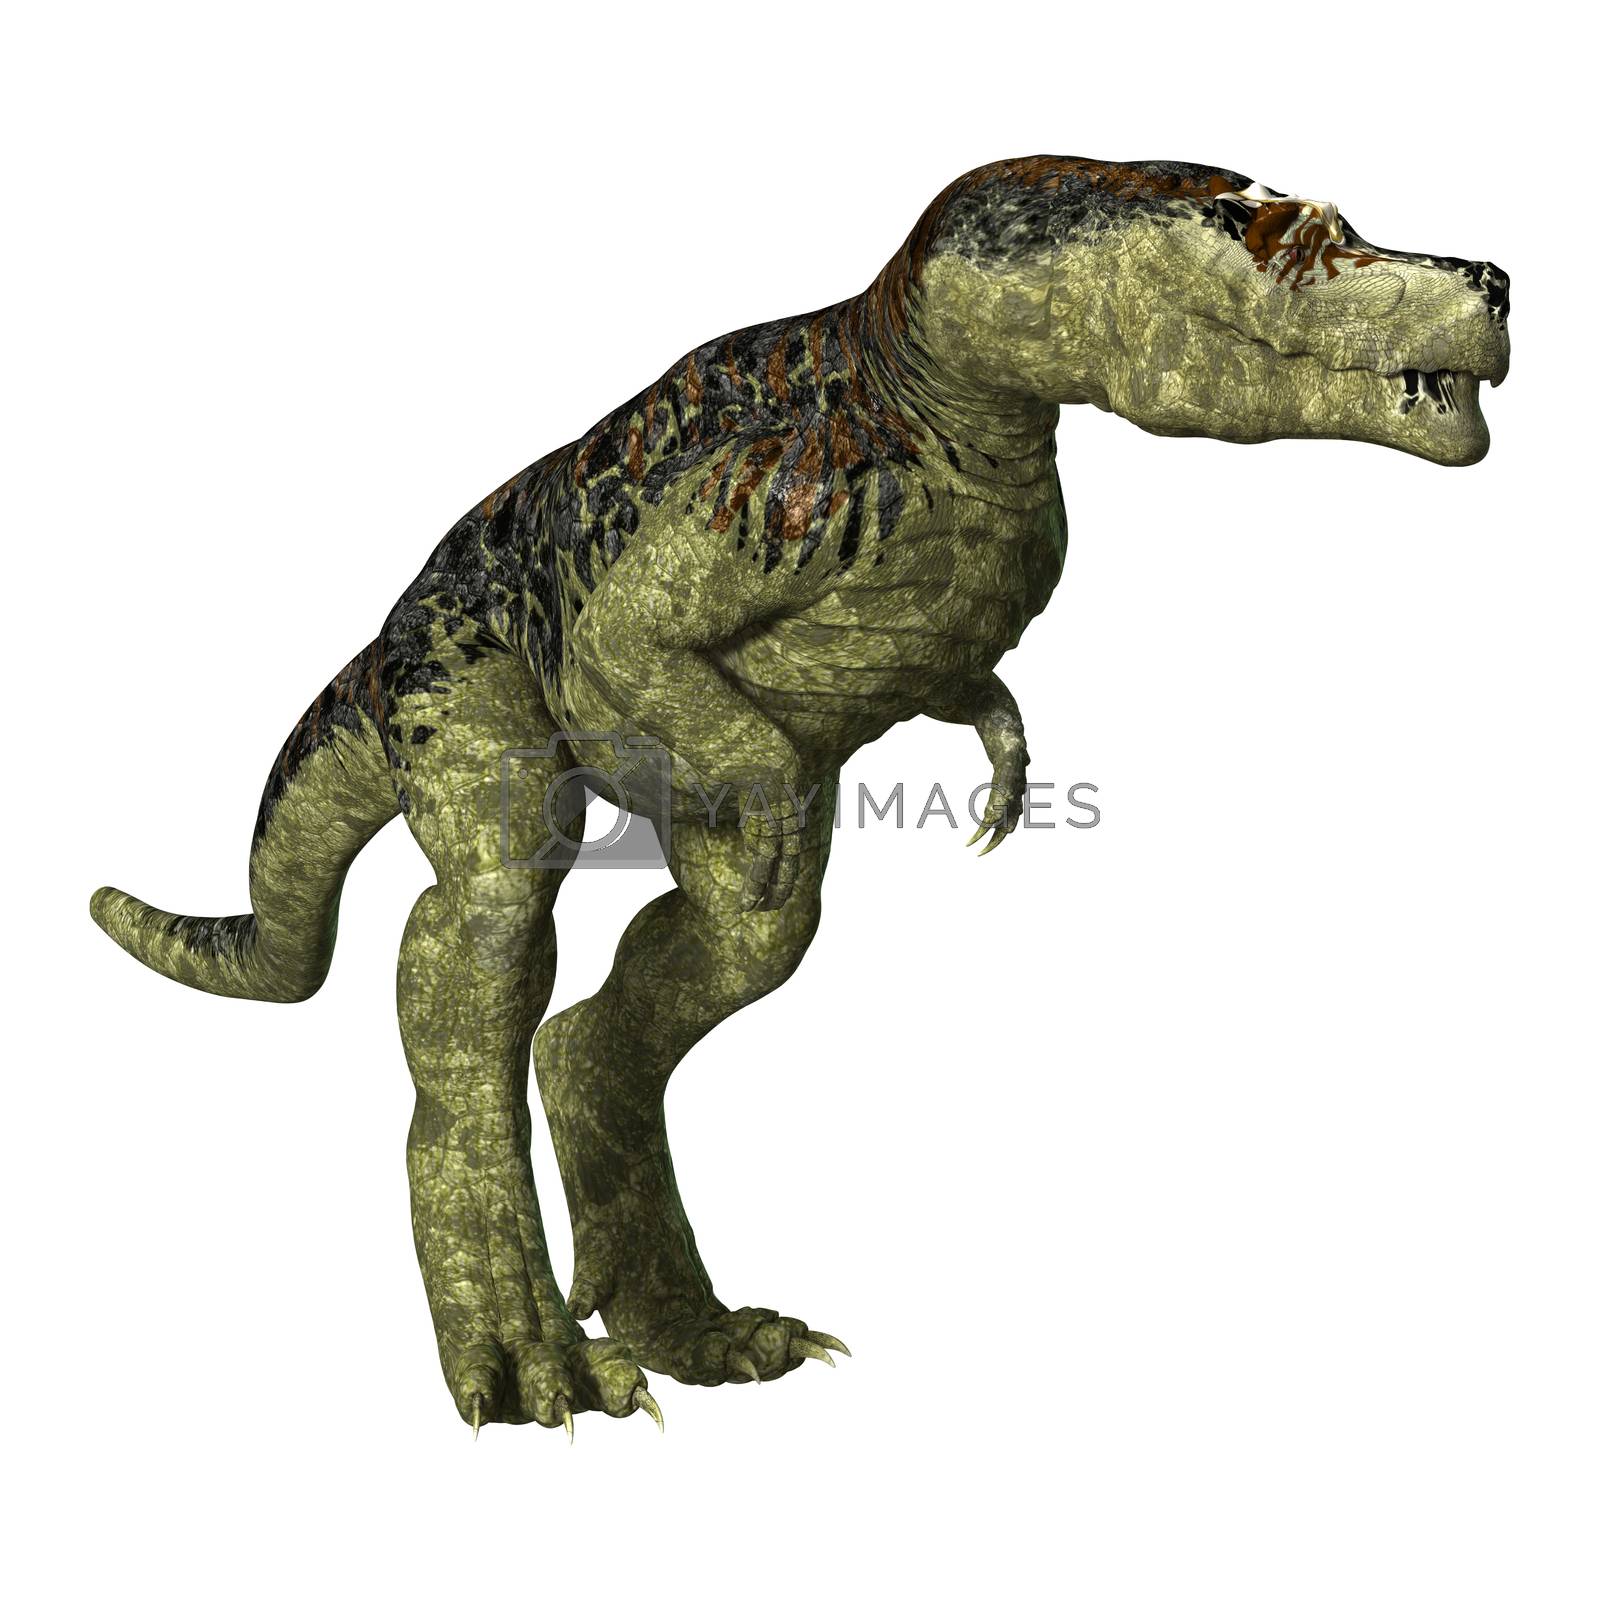 Royalty free image of Tyrannosaurus Rex by Vac